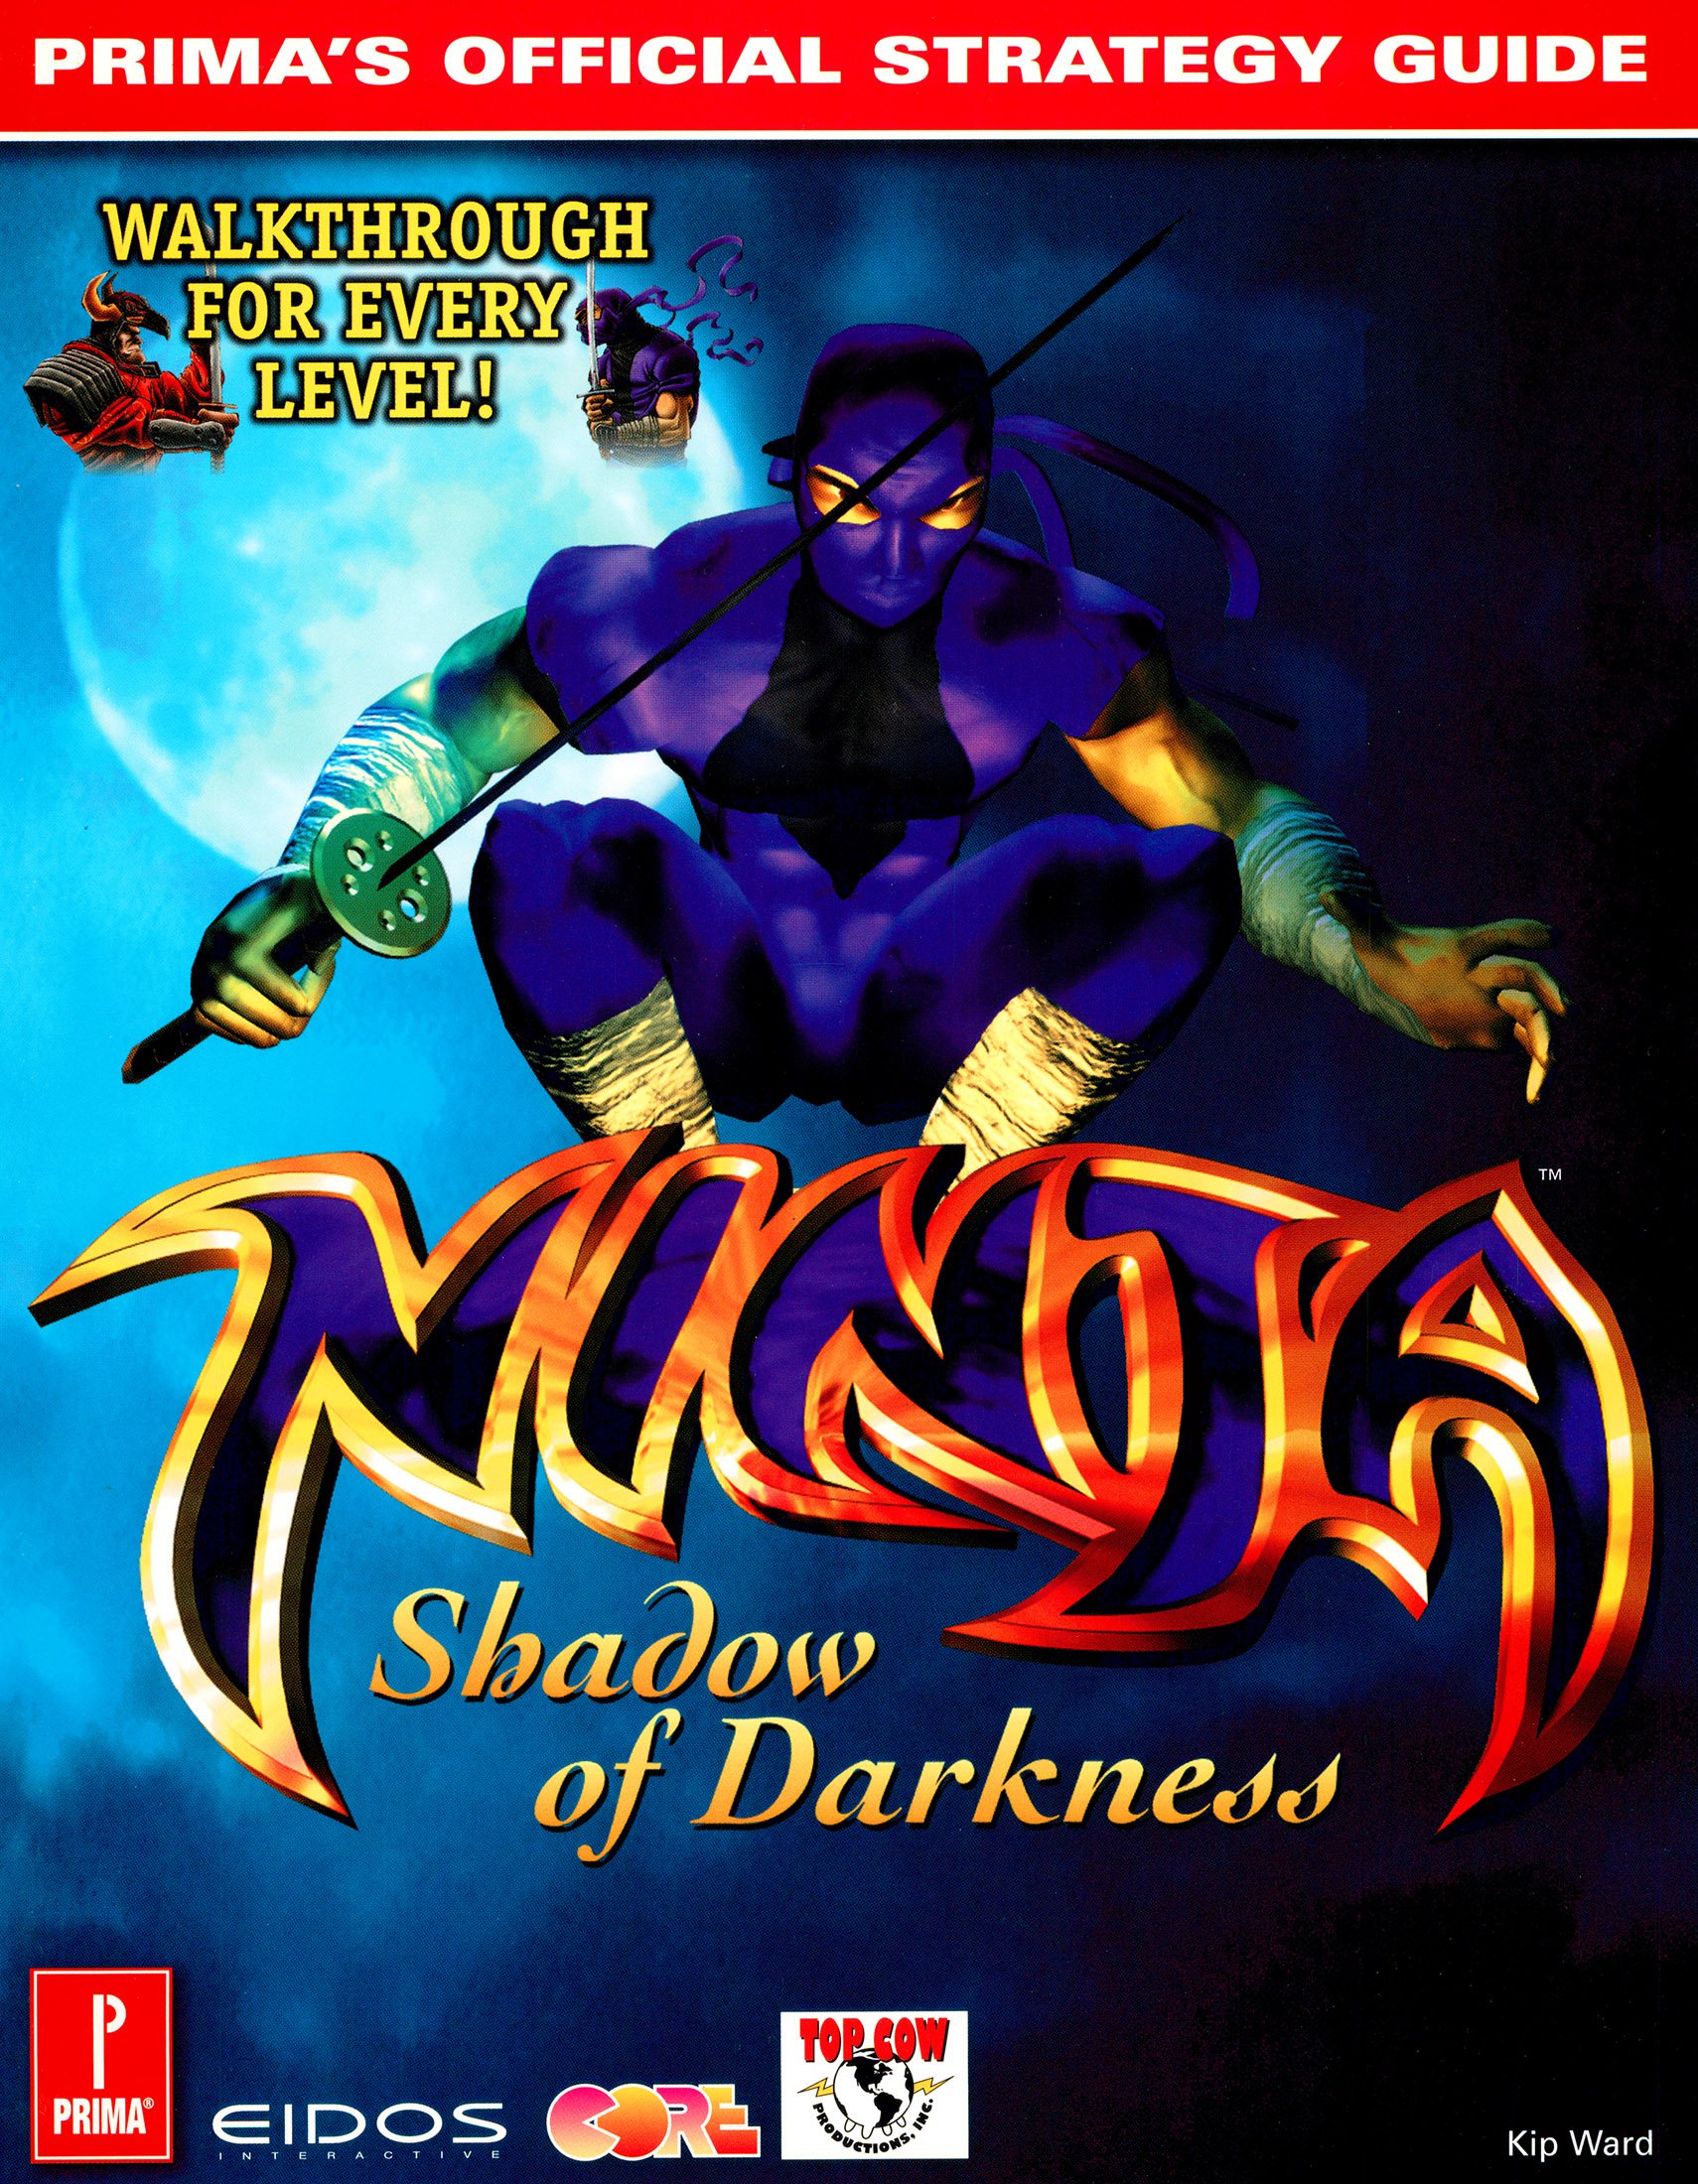 Ninja: Shadow of Darkness - Wikipedia